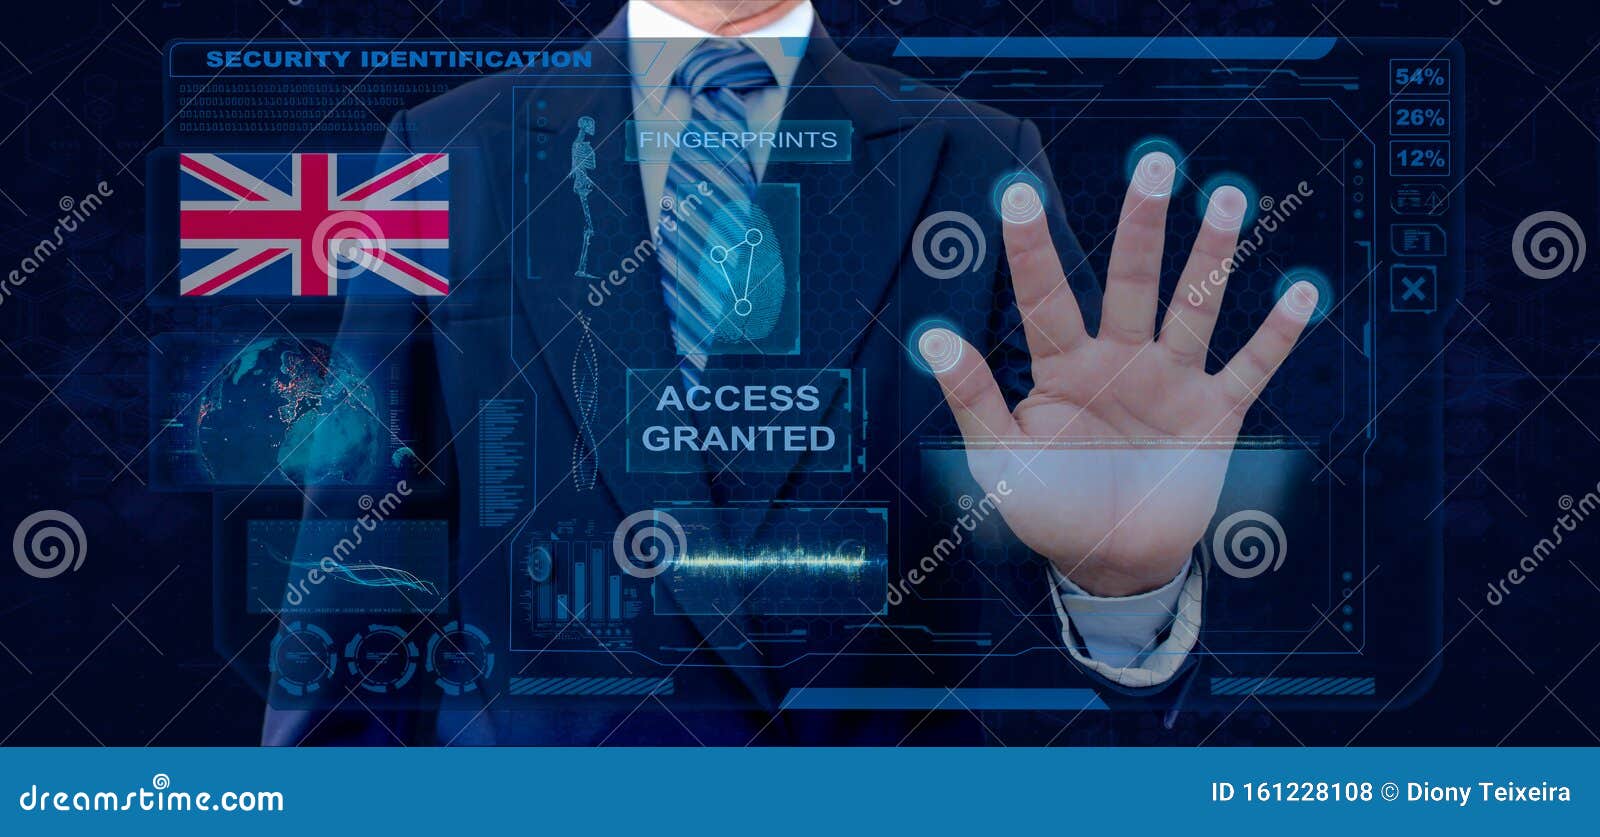 finger print biometric scanning identification system. businessman scan fingerprint biometric identity and approval. united